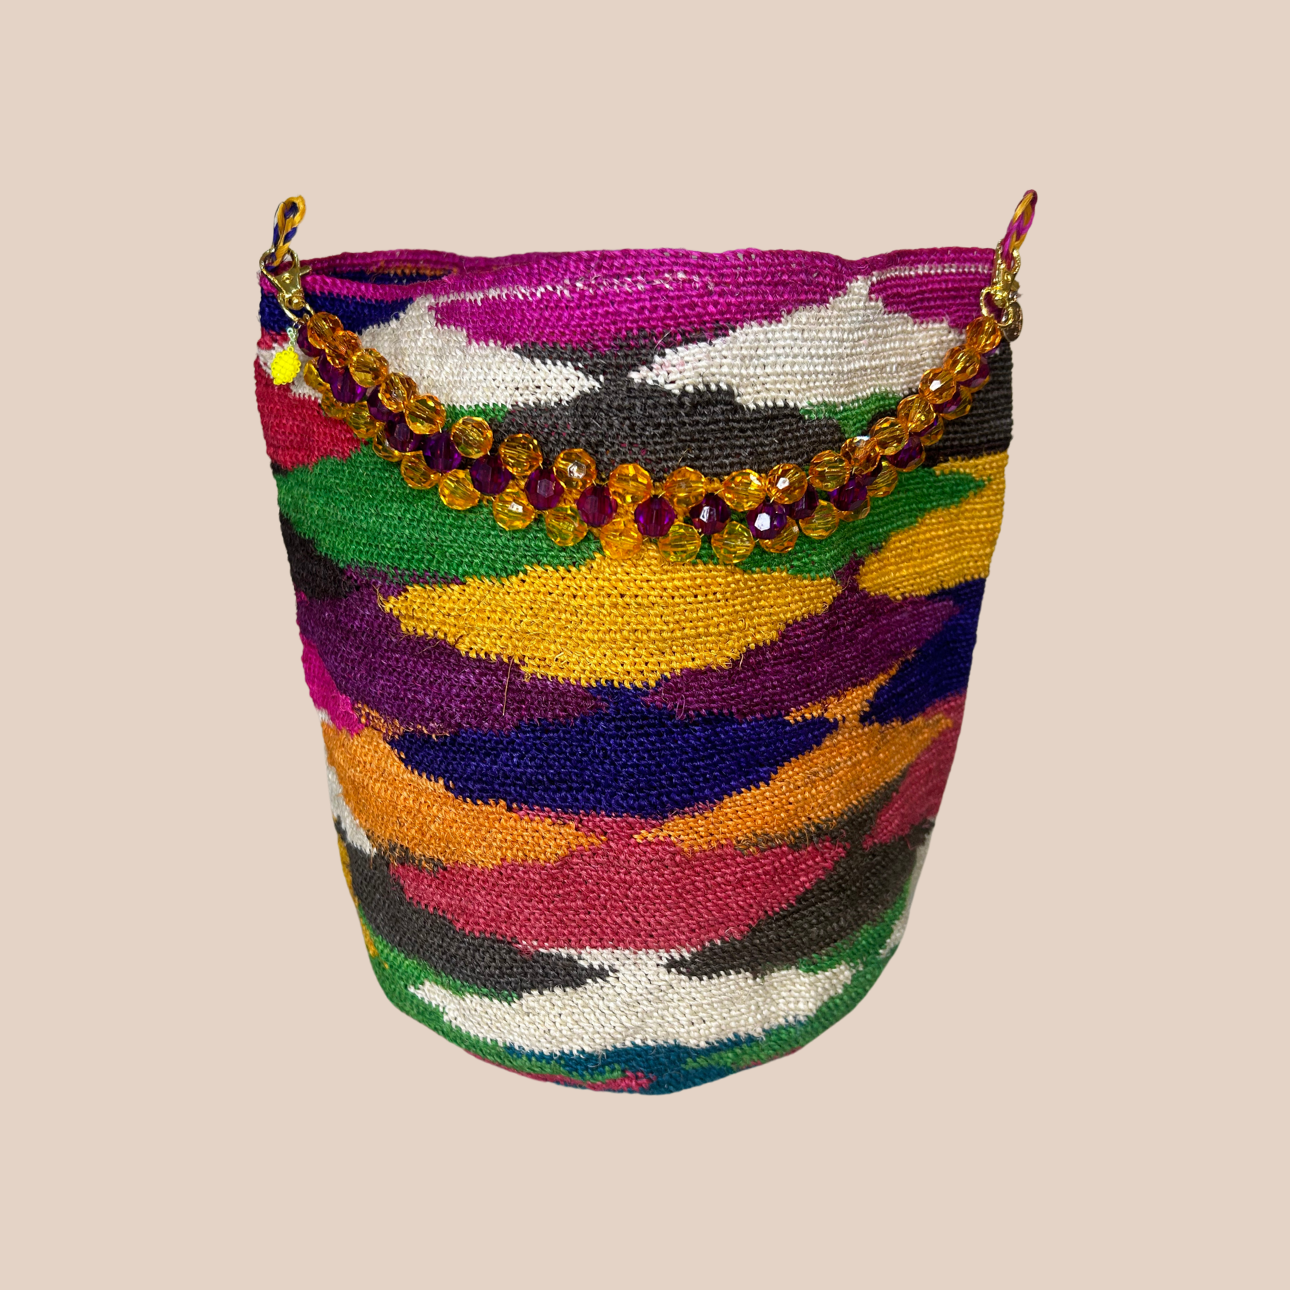 Image du sac PRINCESA de Maison Badigo, un sac en fibres de cactus naturelle avec une anse en perle motif citron.